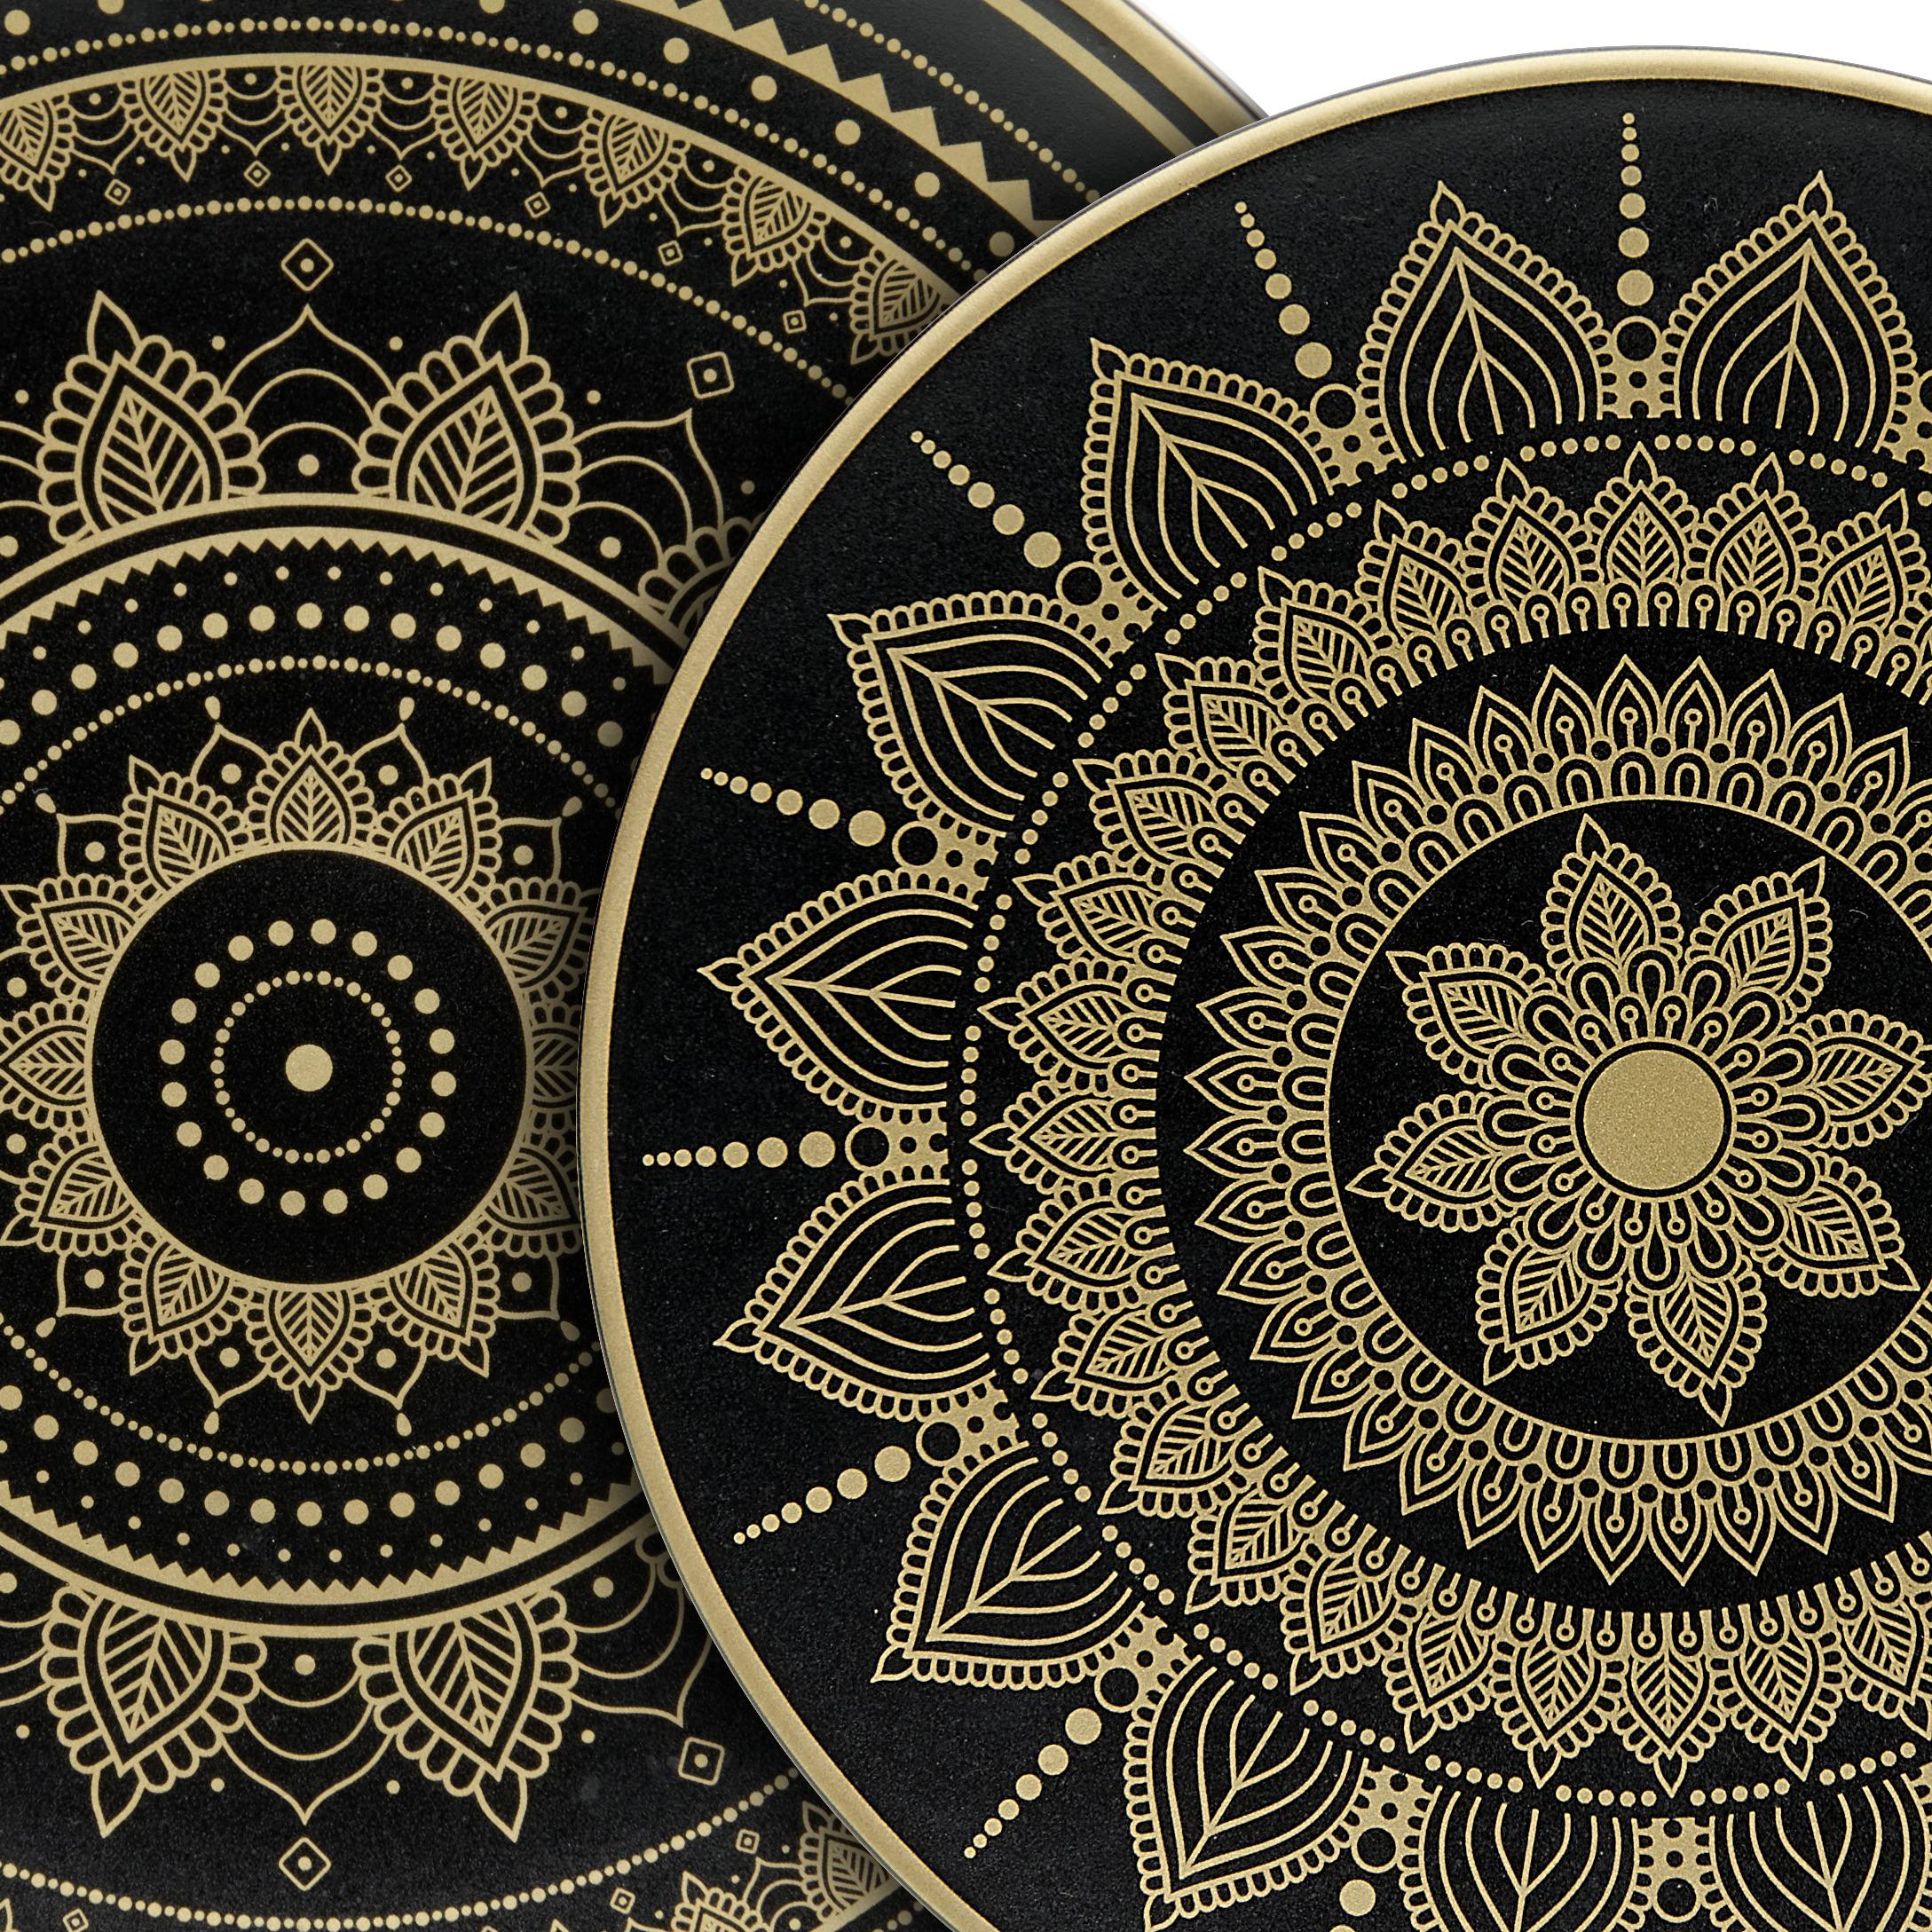 Kombinovaná Souprava Mandala Gold, 8dílná - černá/barvy zlata, keramika (29,5/29,5/25,5cm) - Premium Living